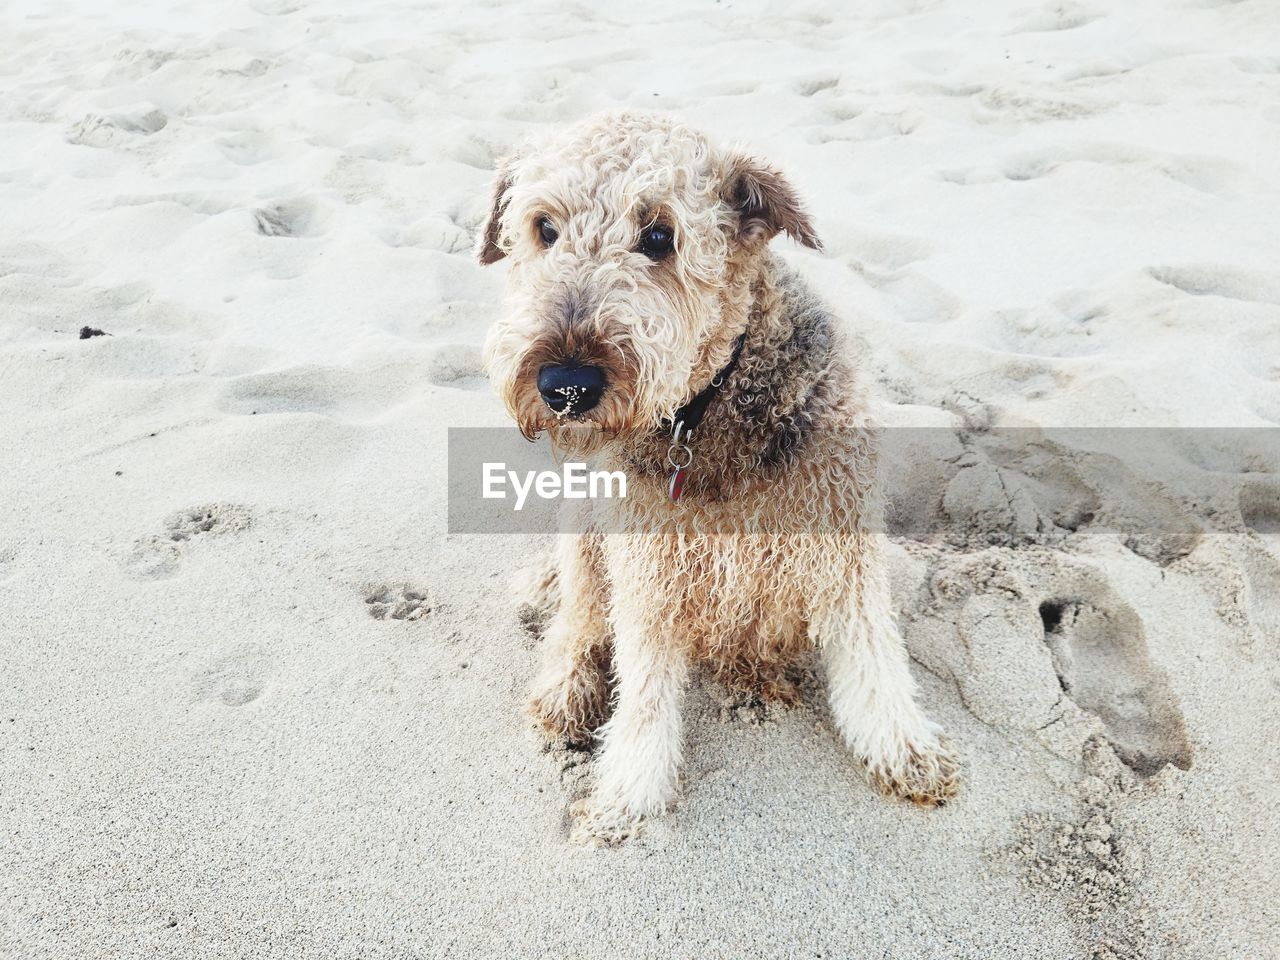 PORTRAIT OF DOG ON BEACH